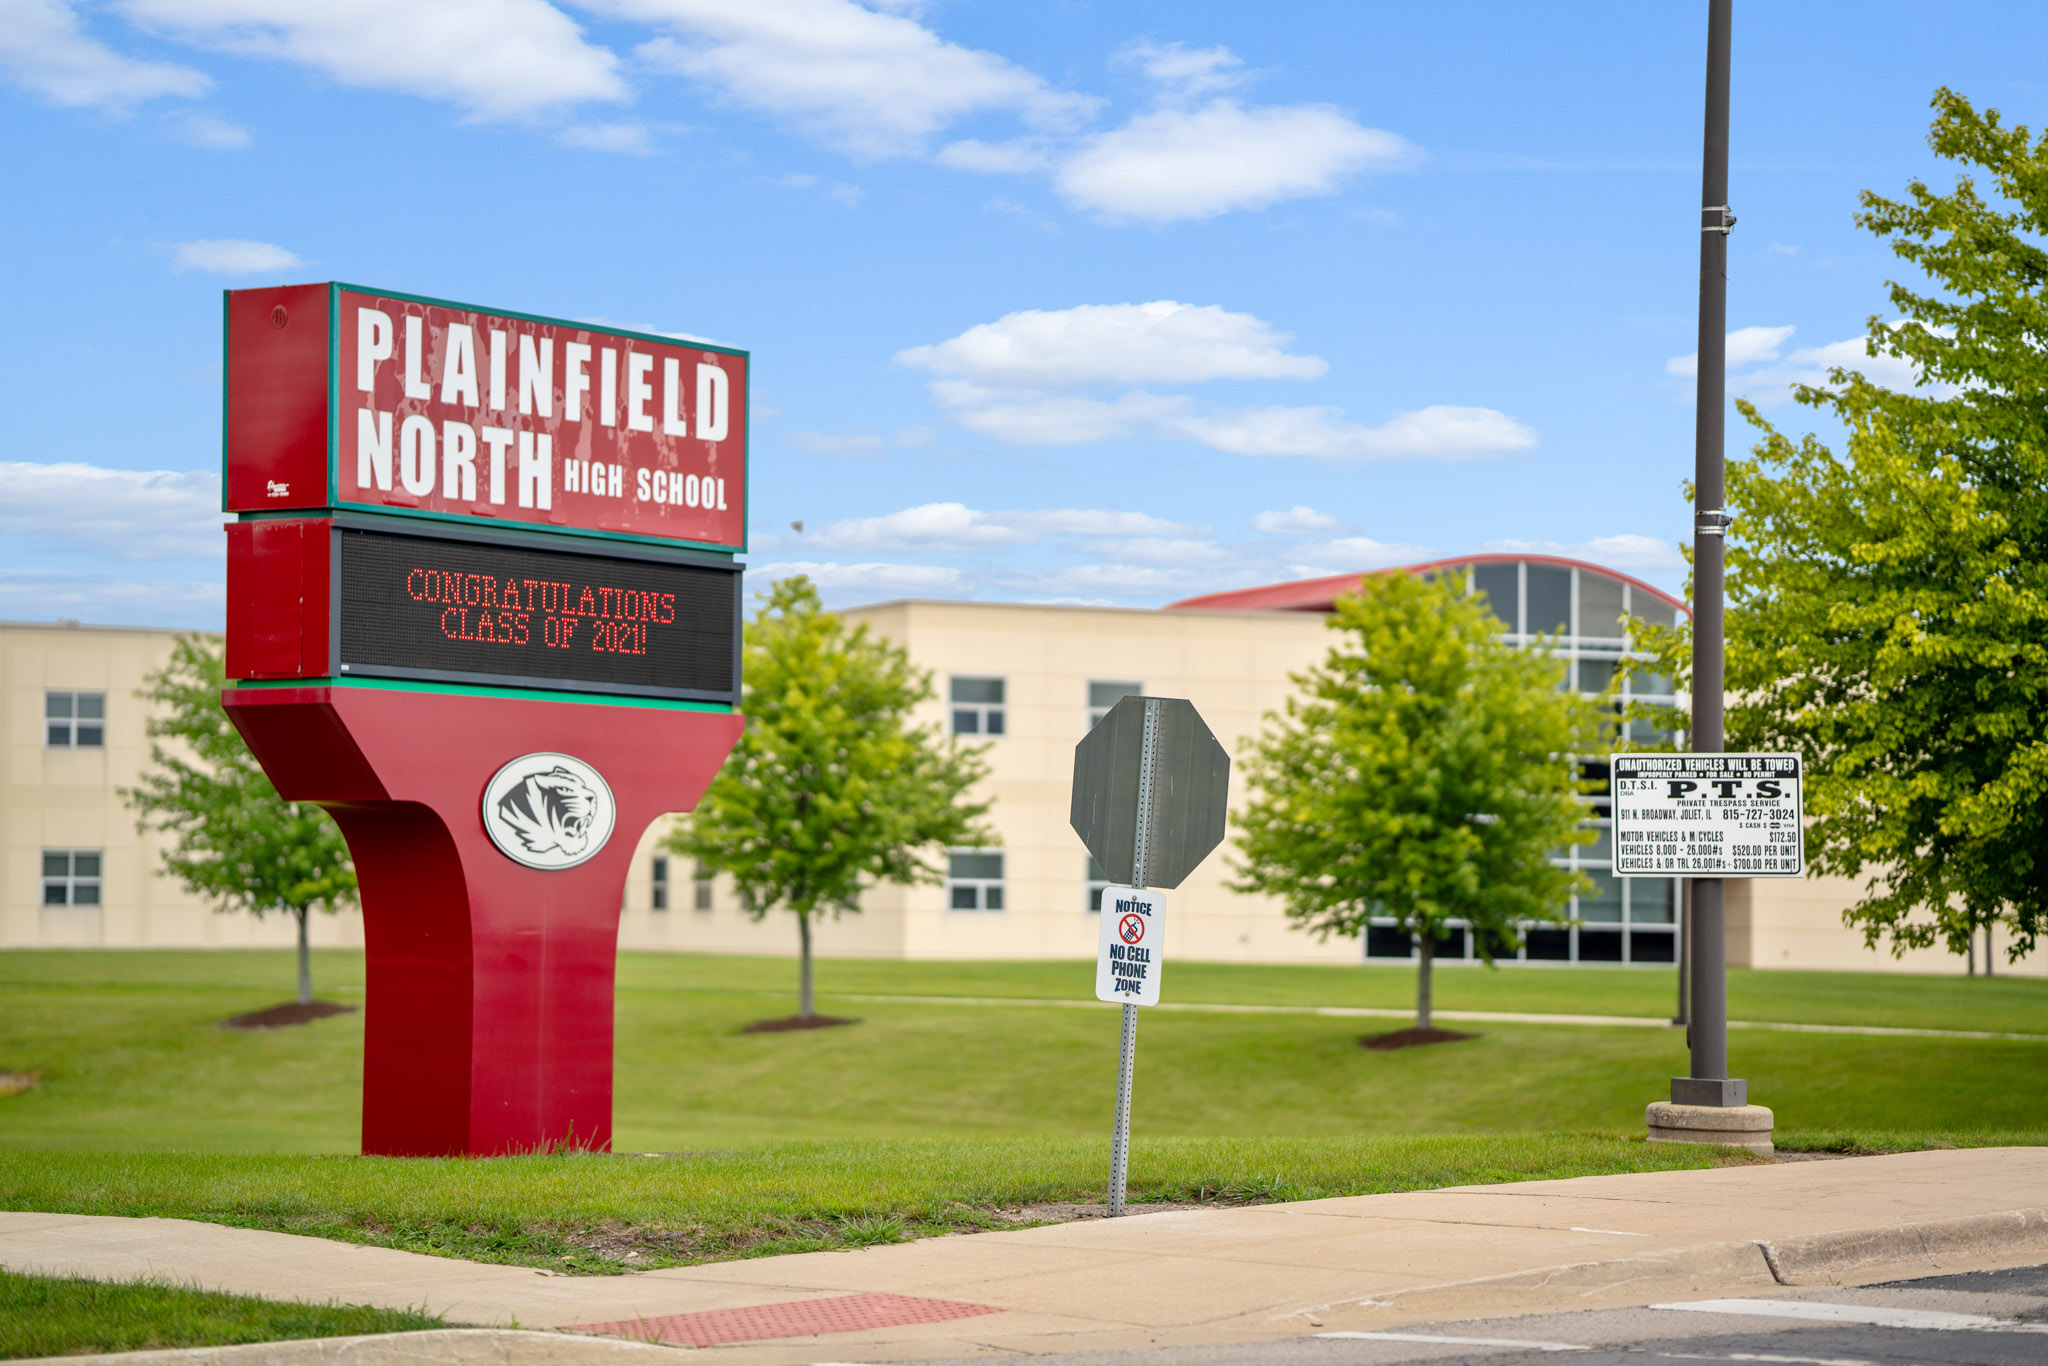 Plainfield North High School